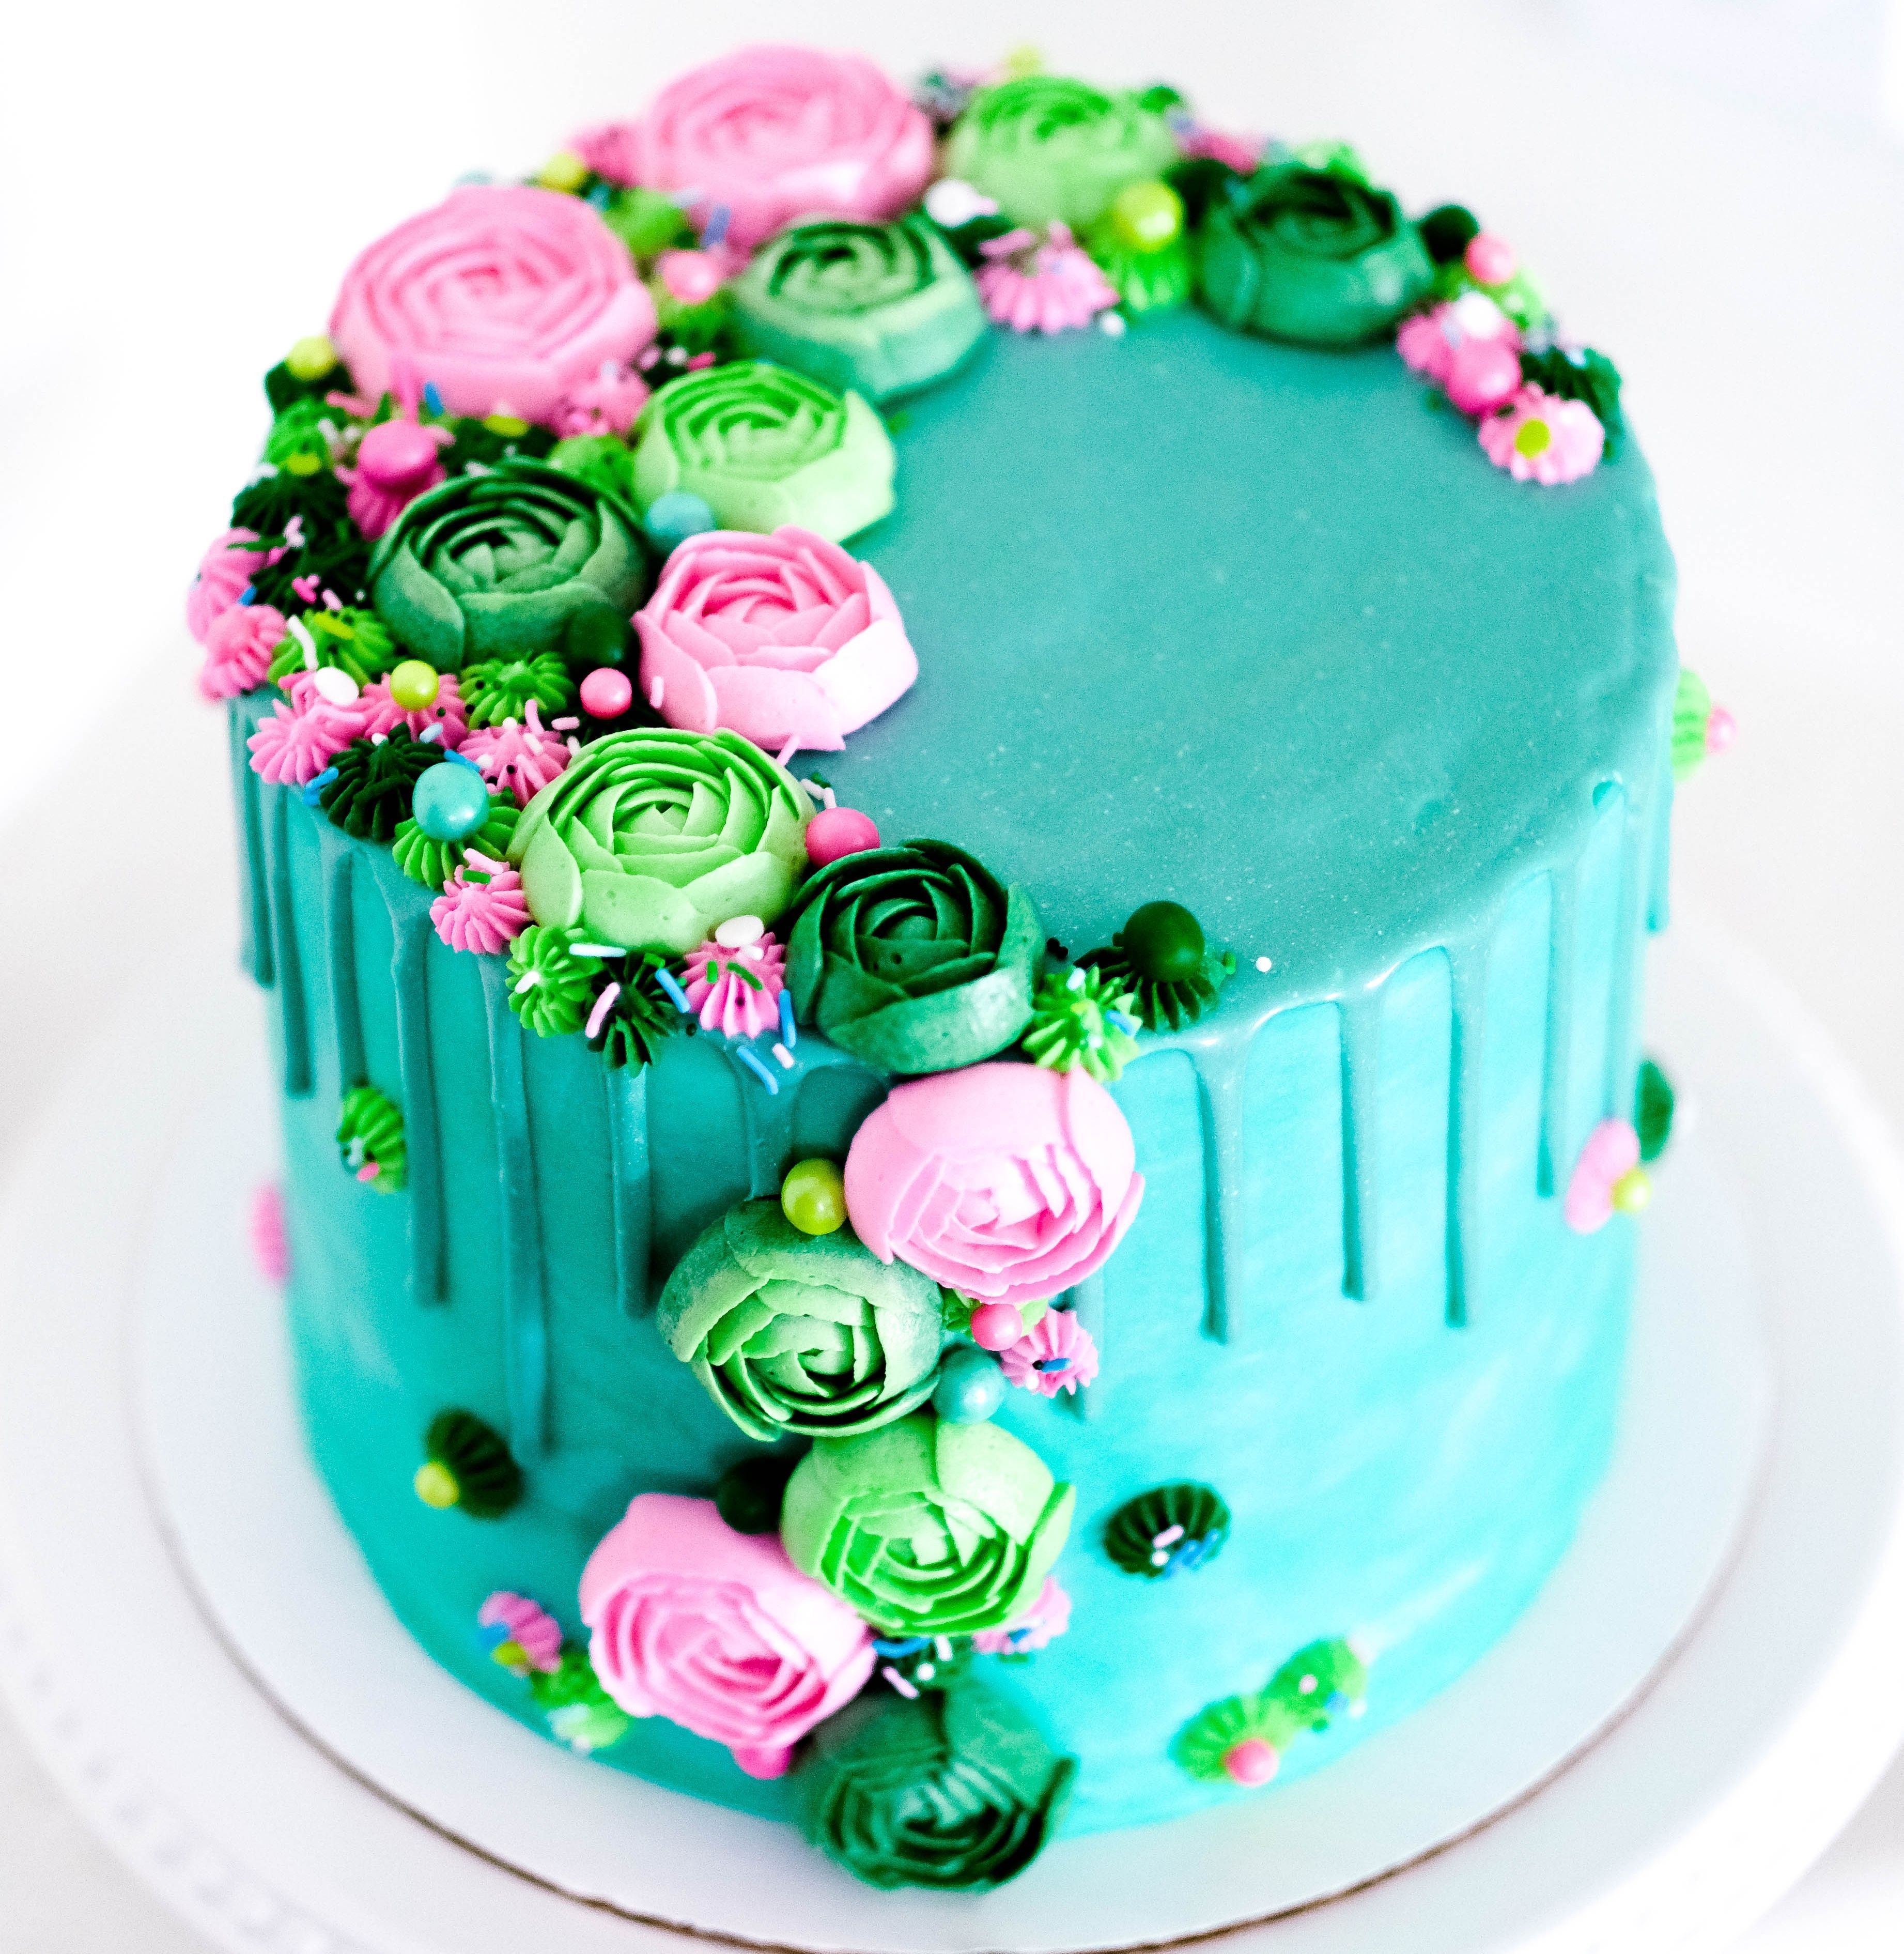 Торт для девочки крем чиз. Украшение торта для девочки. Торт с цветами. Торт с кремовыми цветами. Торт девочка.